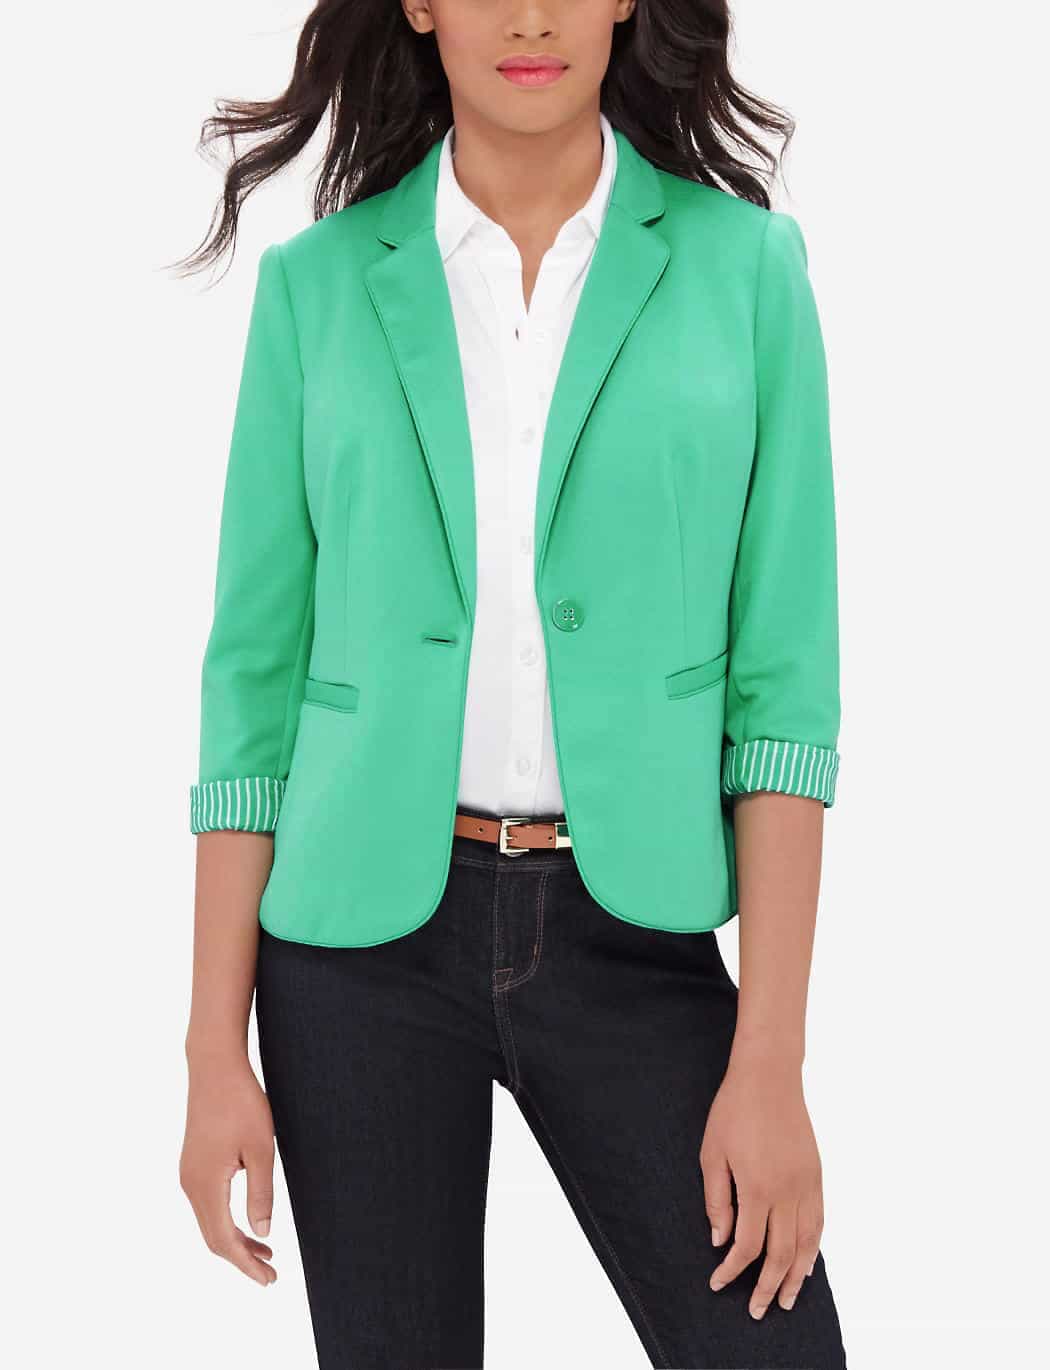 womens blazers - green spring blazer